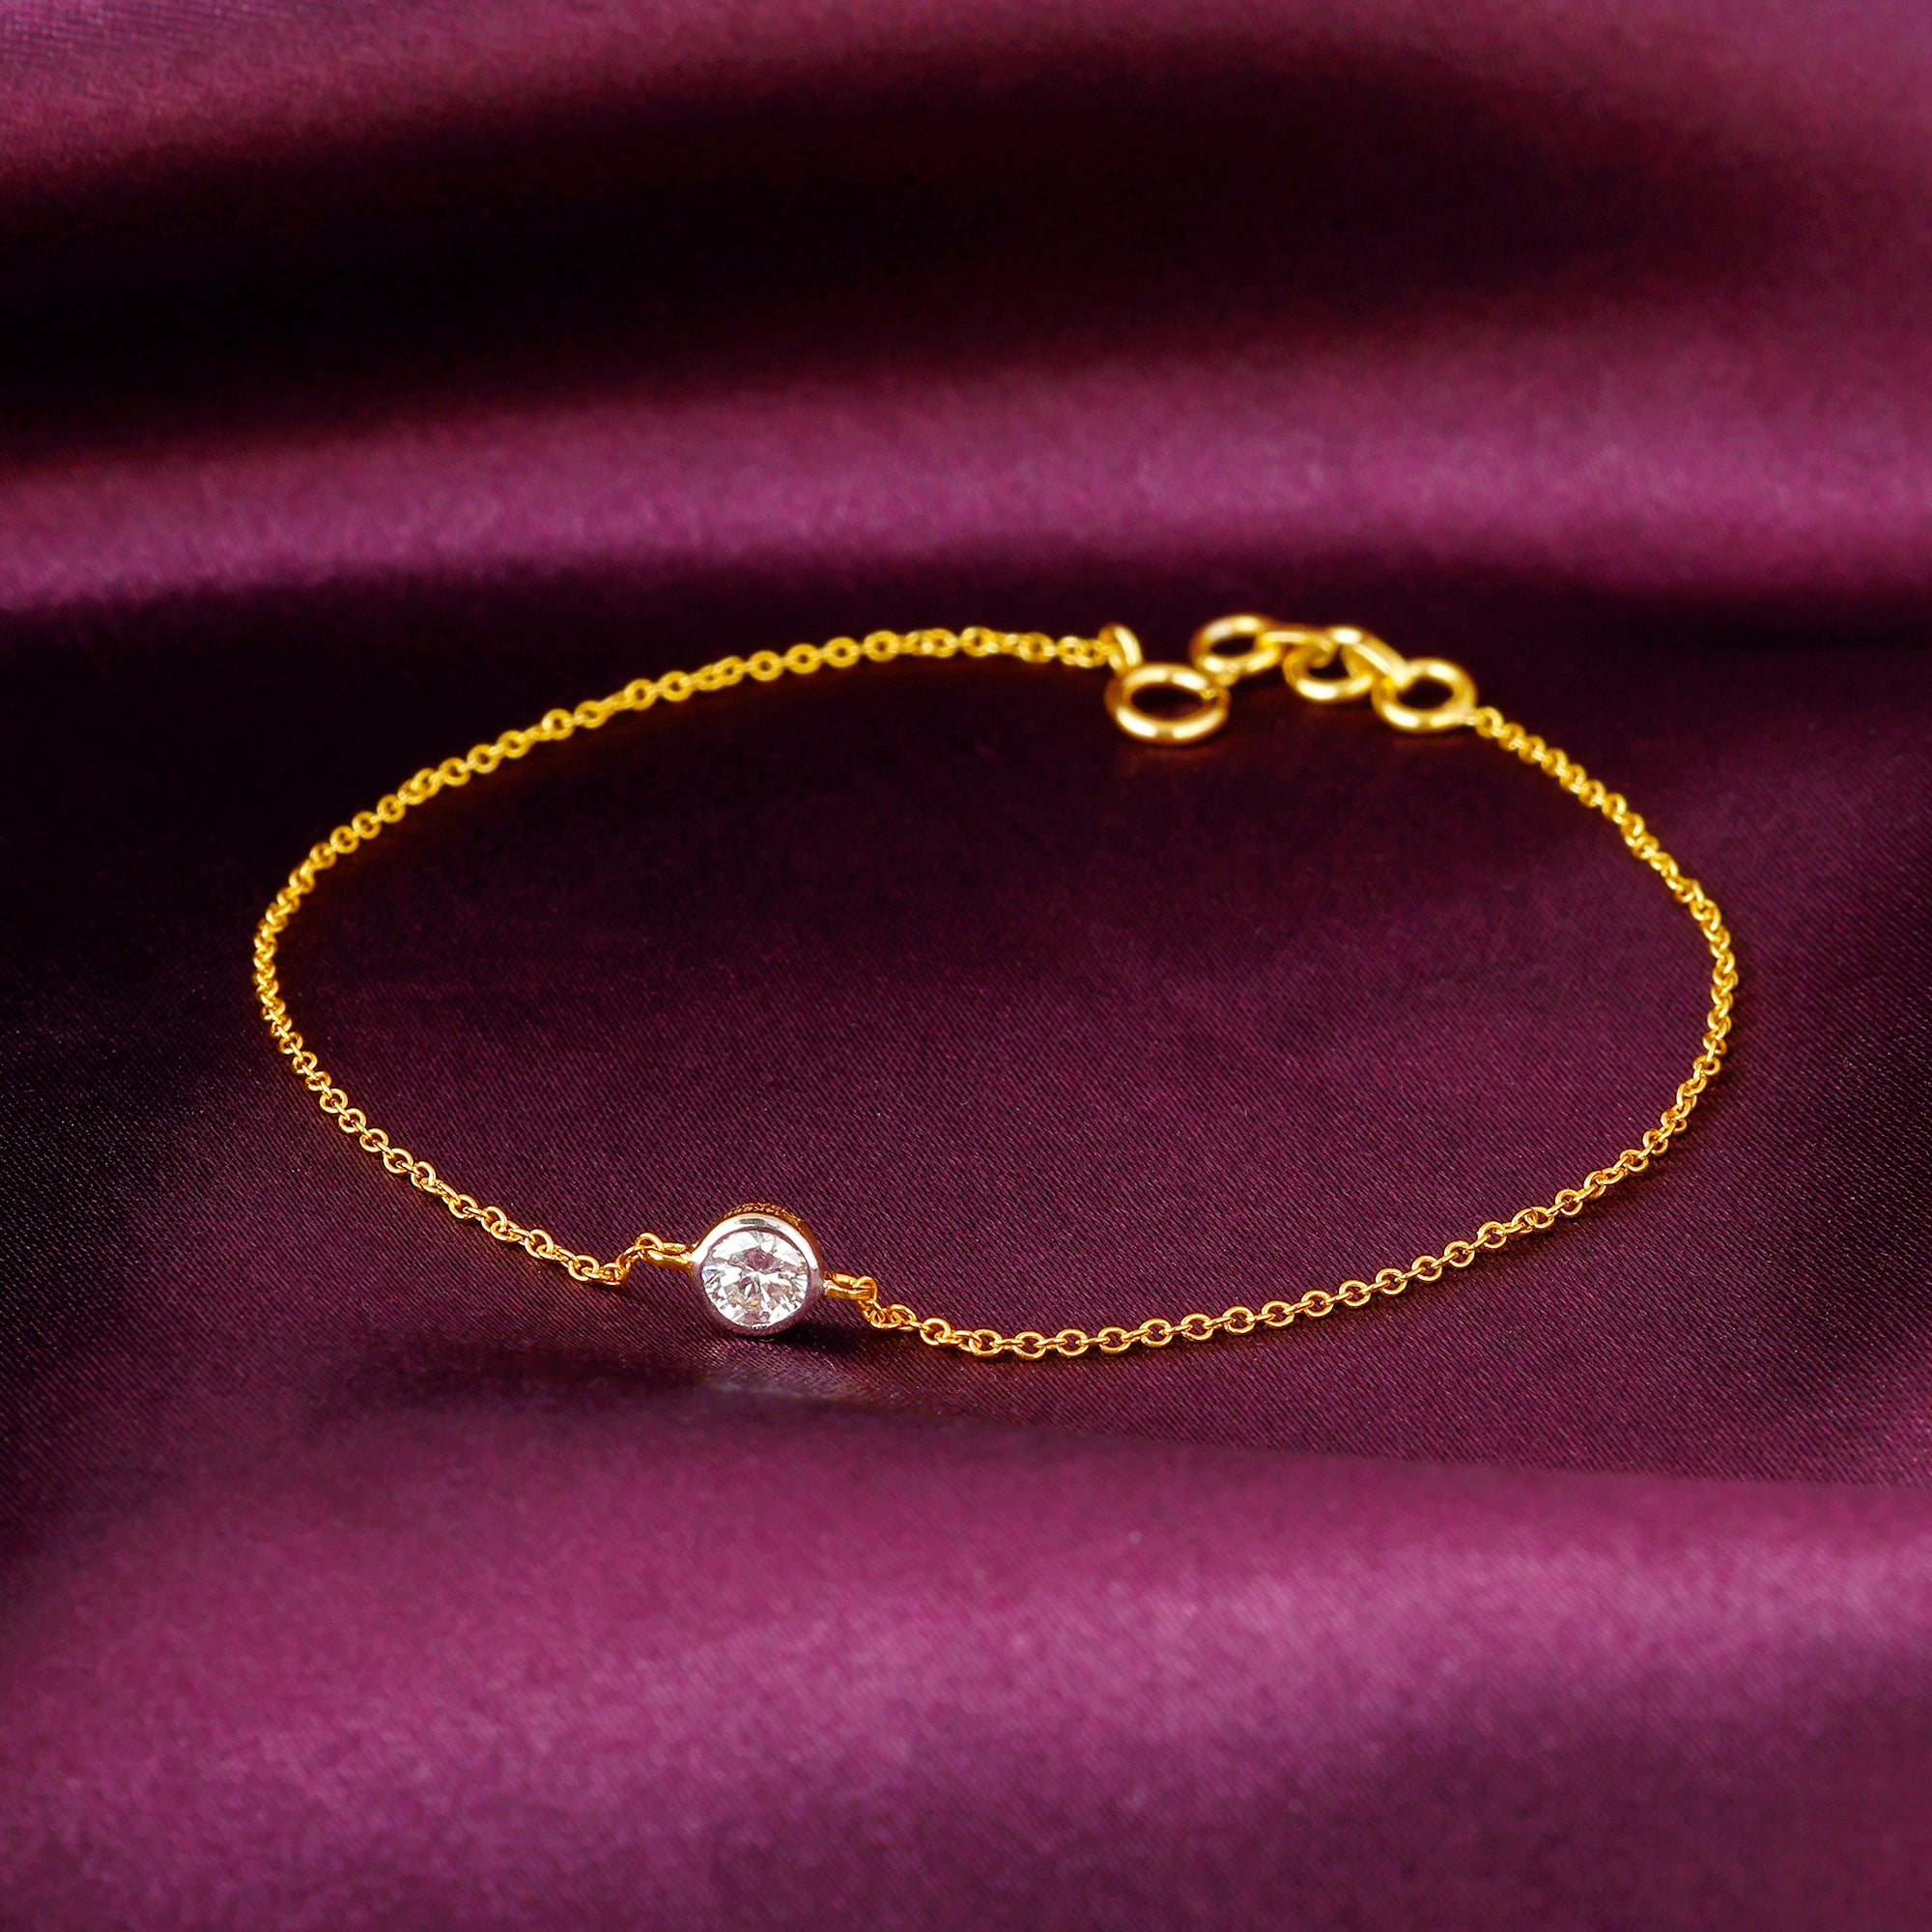 1 Gram Gold Plated Gorgeous Design Delicate Design Bracelet For Men - Style  C498 at Rs 2870.00 | Gold Plated Bracelet | ID: 2850675909248